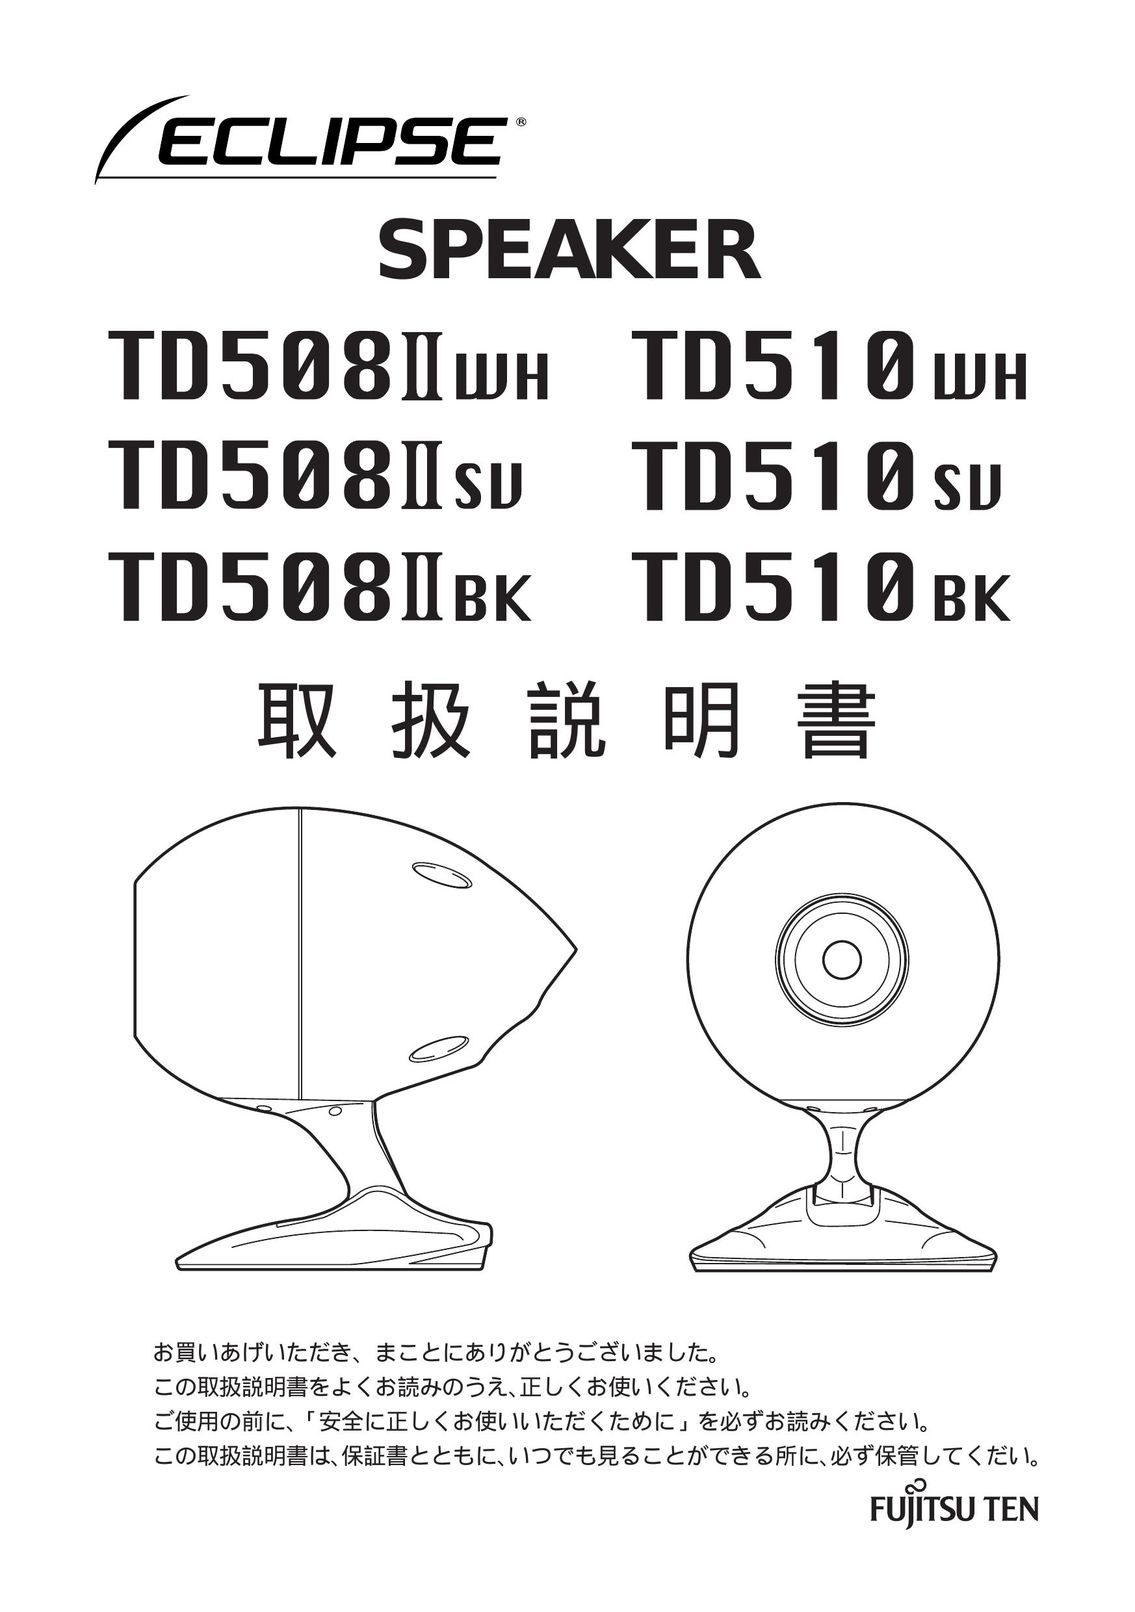 Eclipse - Fujitsu Ten TD508II SV Car Speaker User Manual